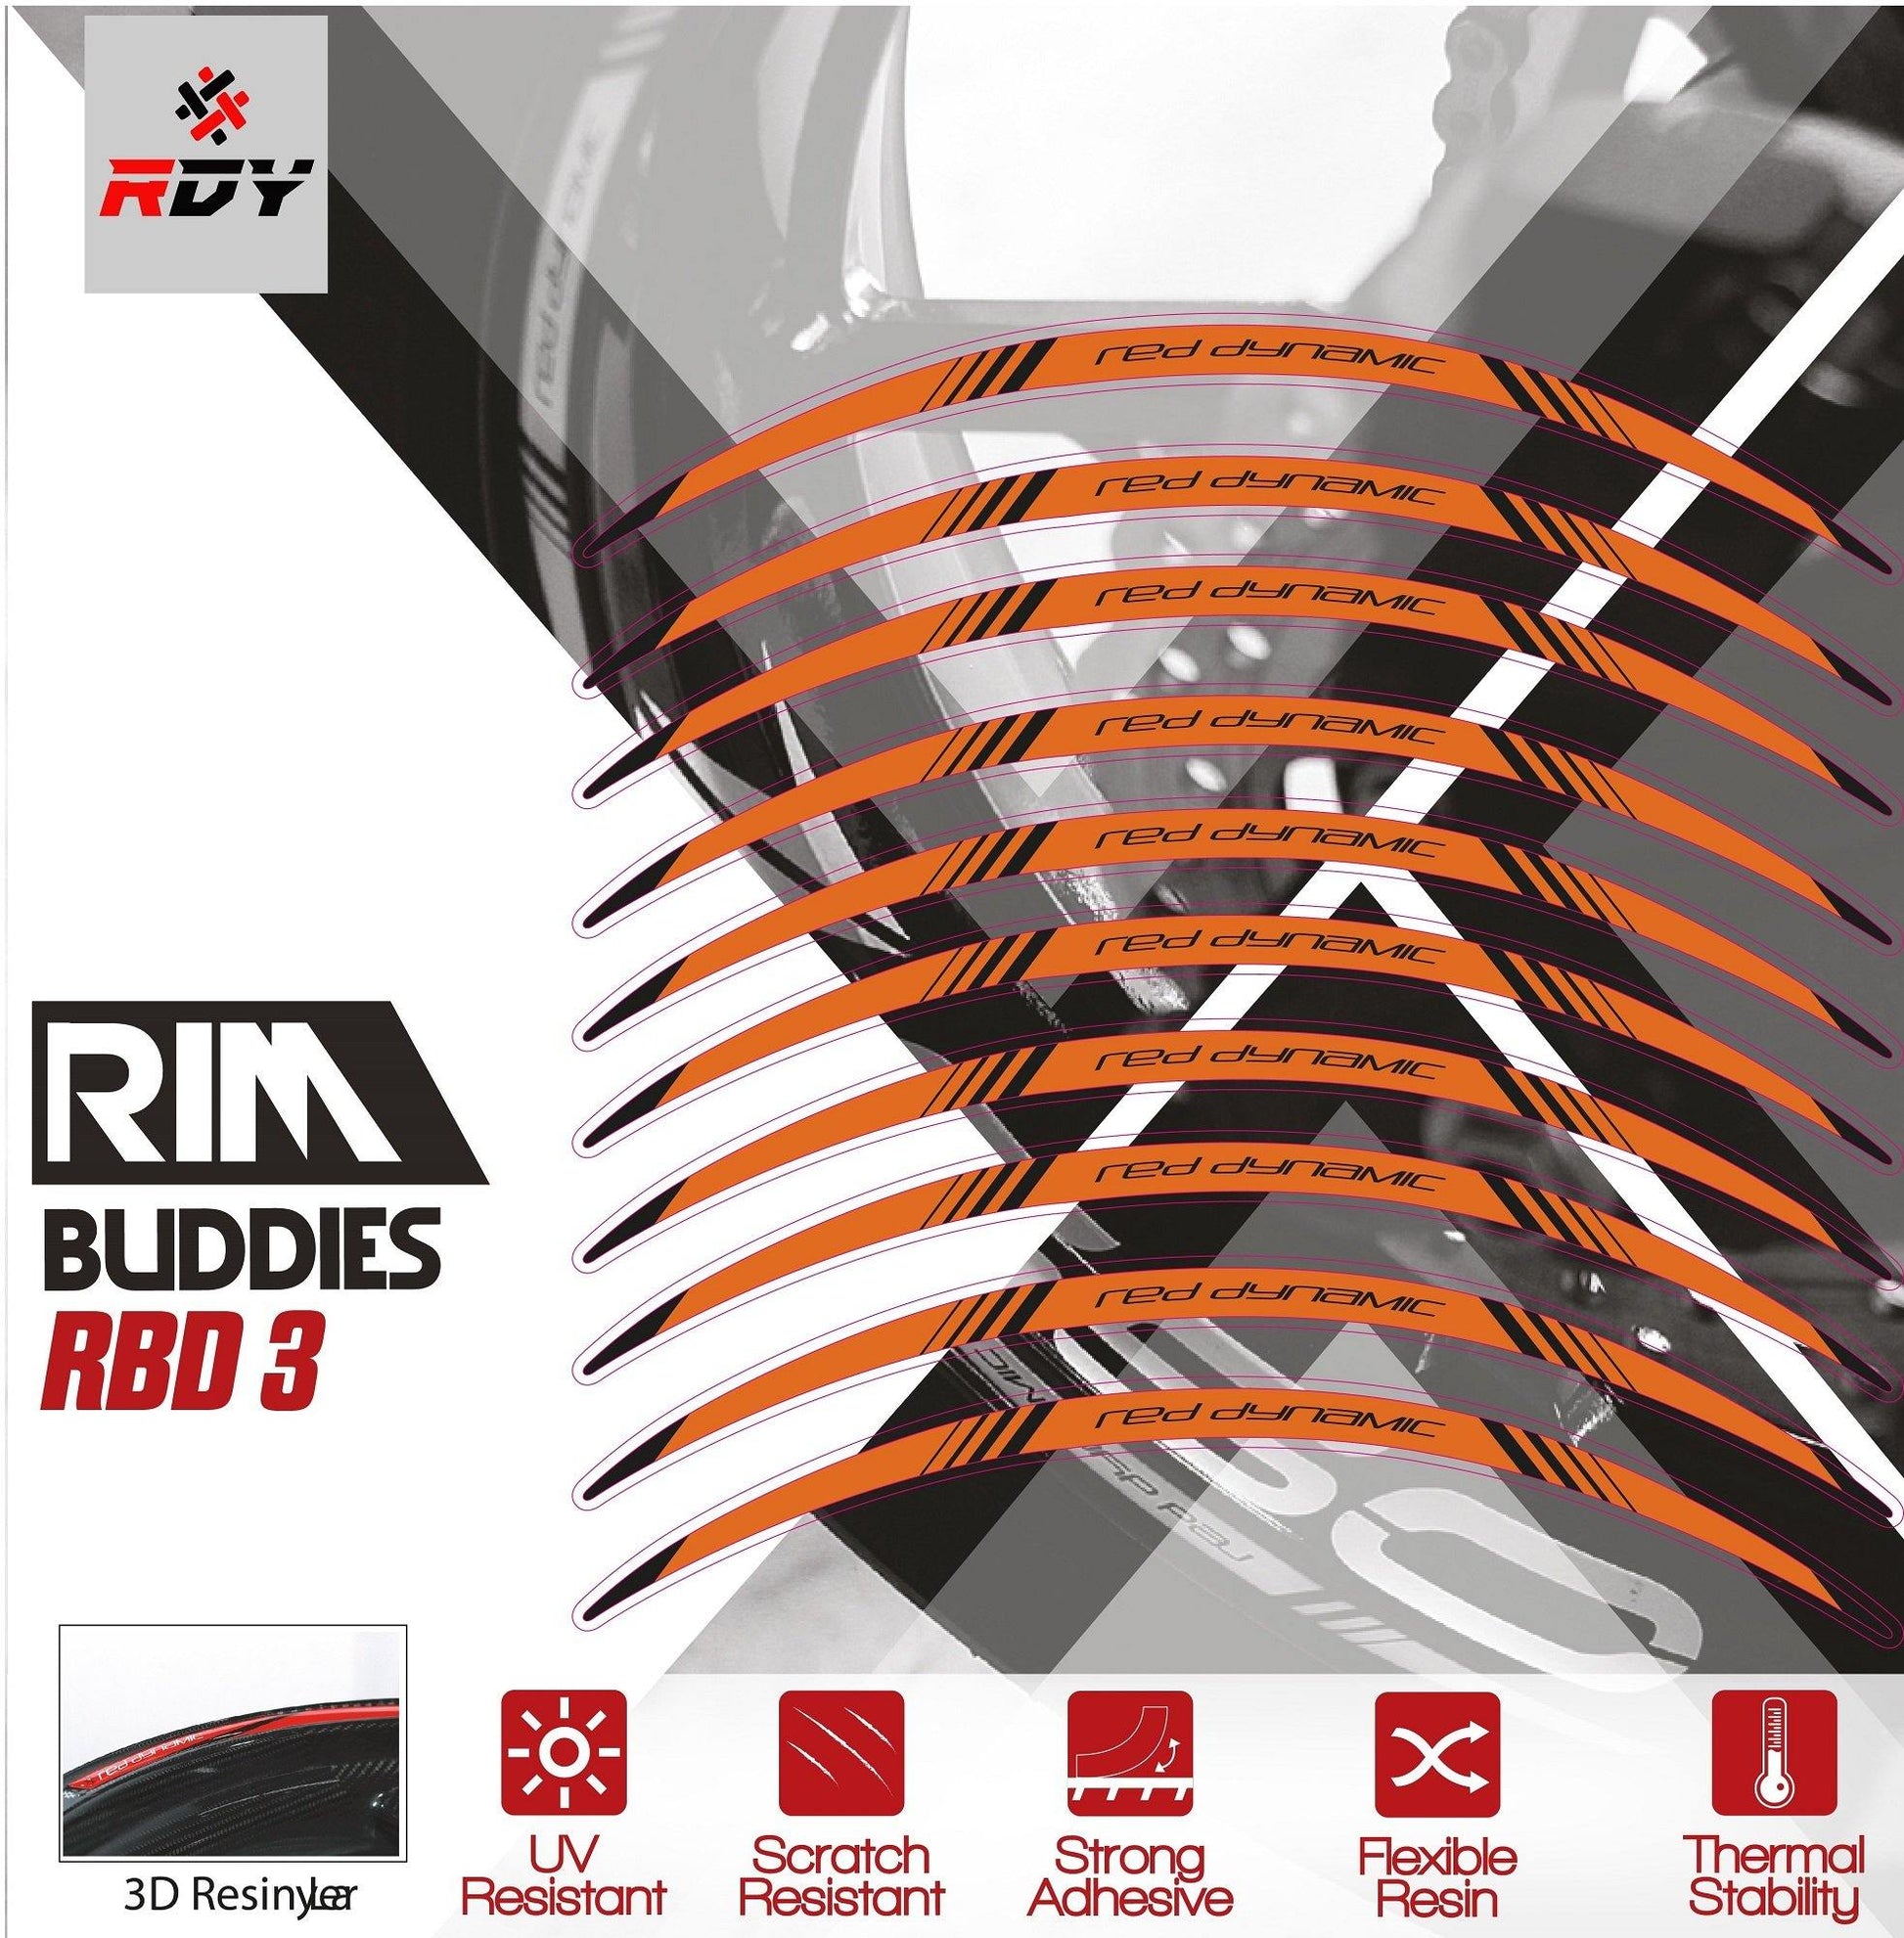 RDY Rim Buddies - Durian Bikers